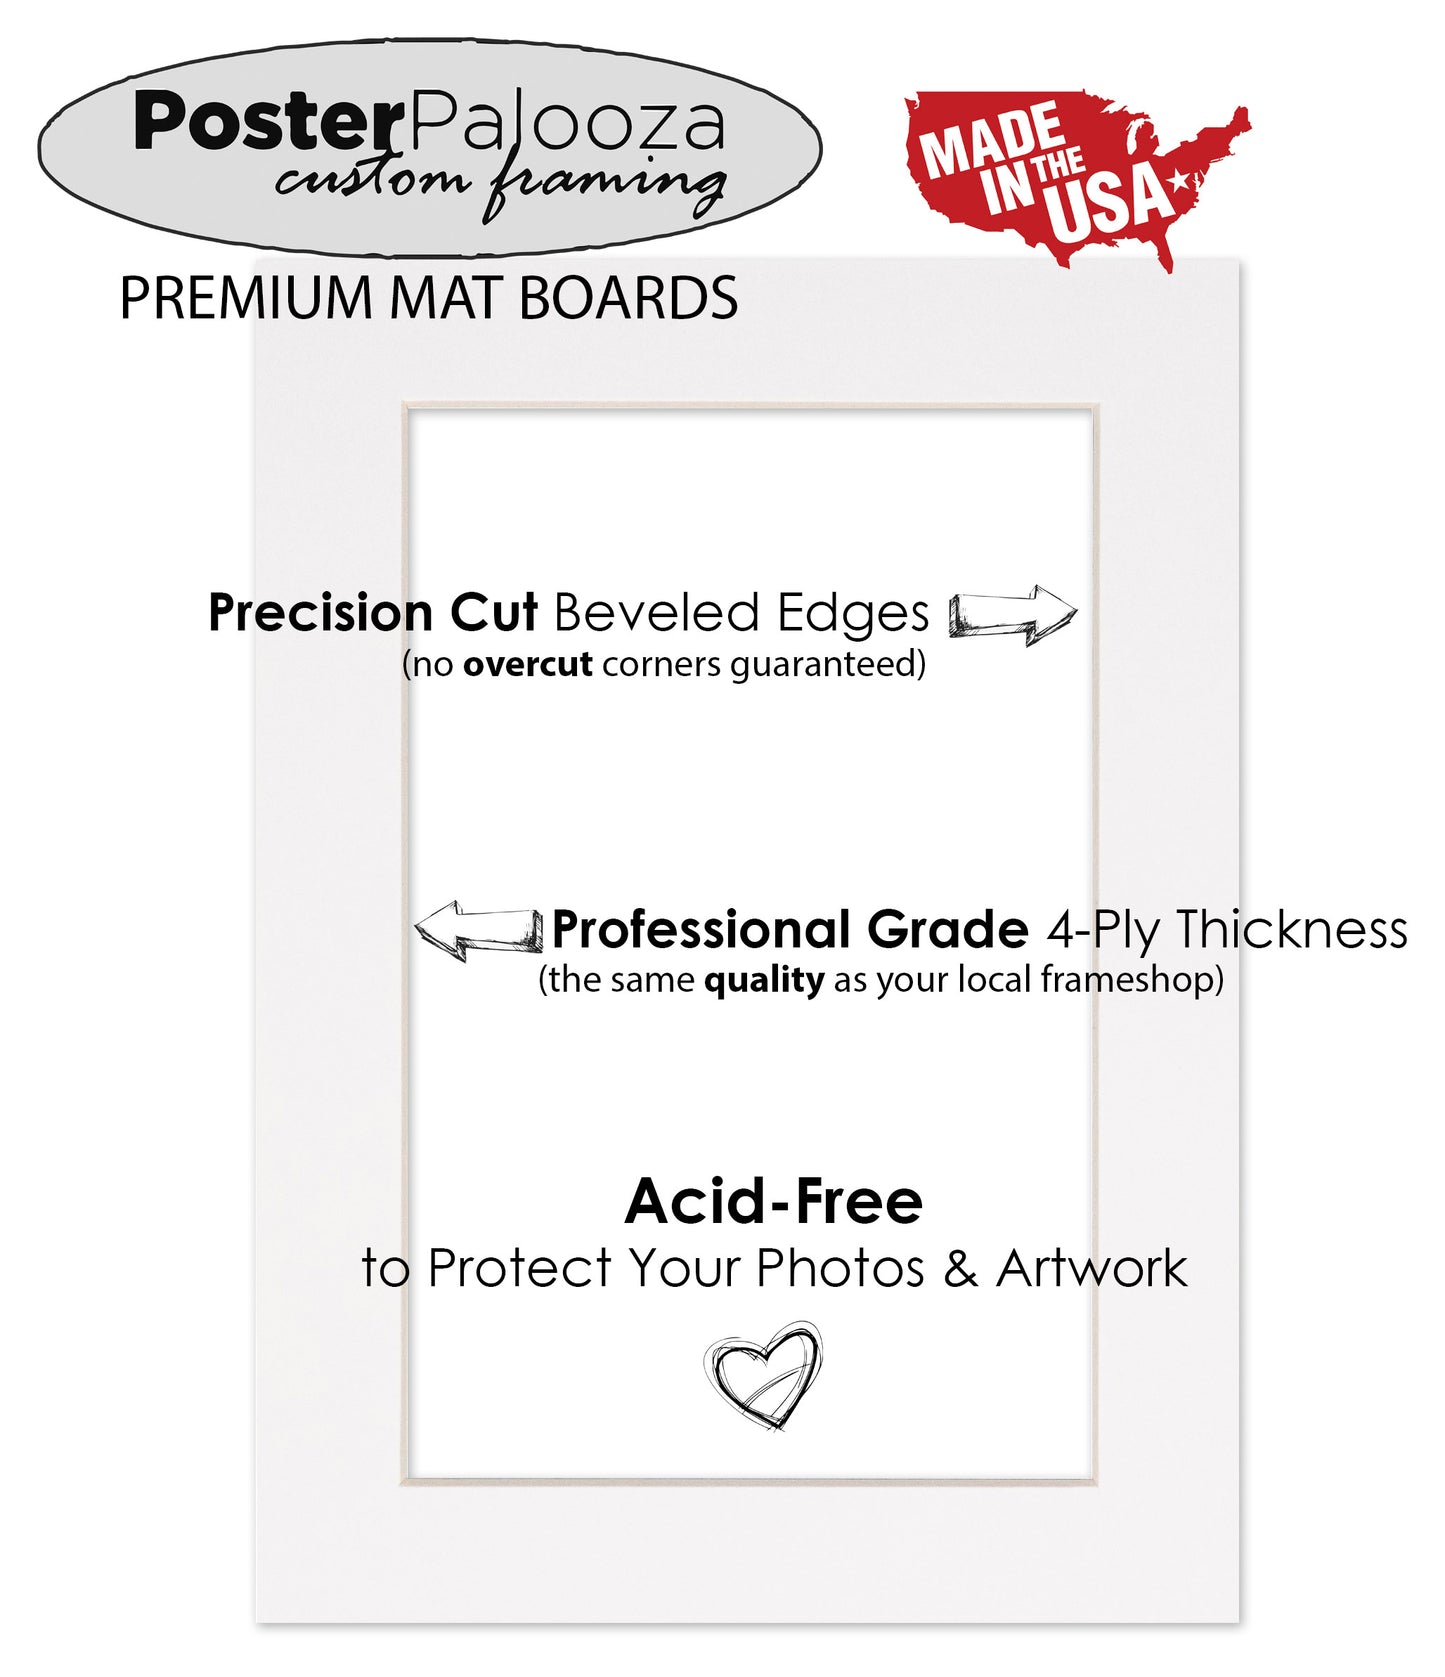 Pack of 25 Textured Black Precut Acid-Free Matboards